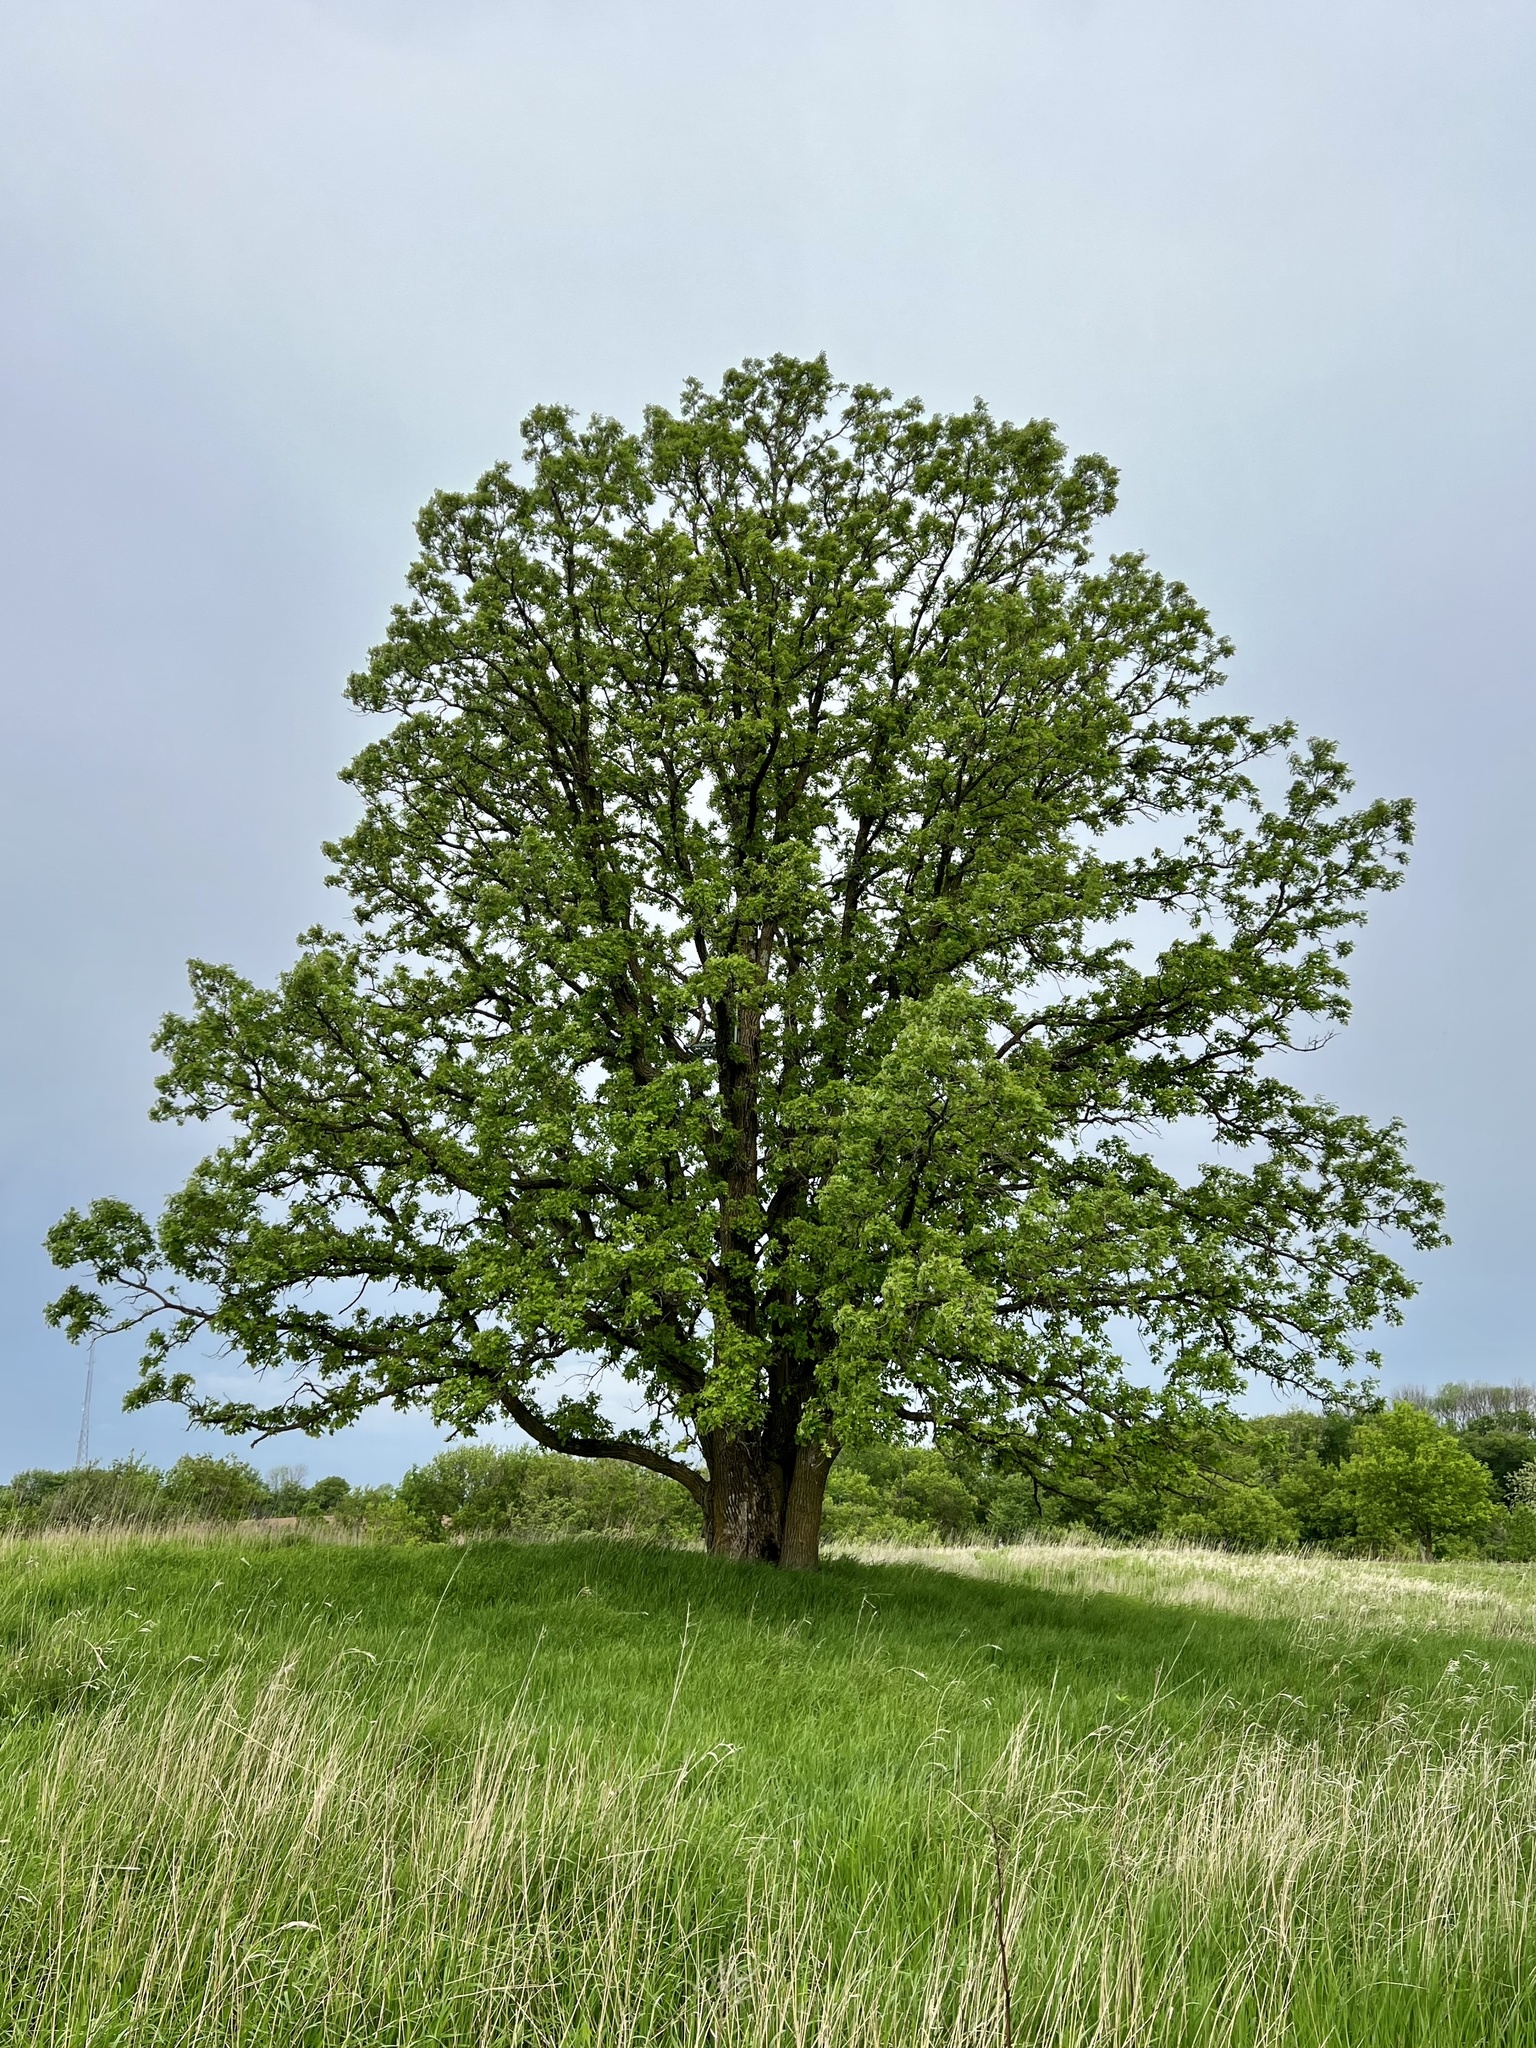 Grand bur oak in a grassland setting, gray-blue sky and green grass.